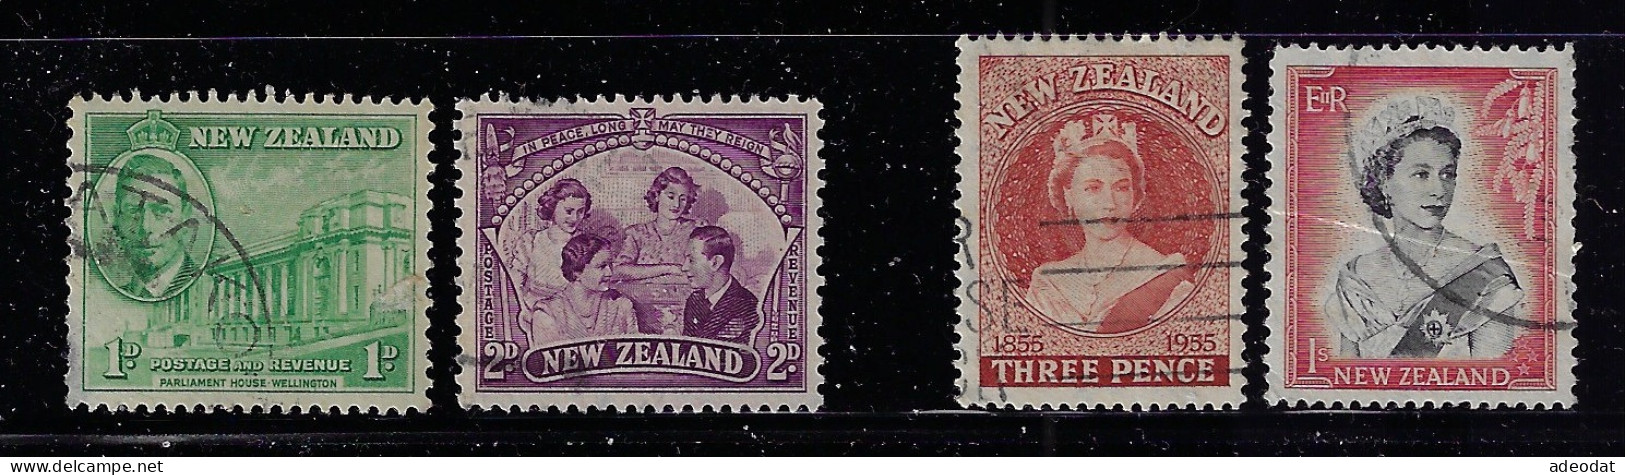 NEW ZEALAND 1946,1955 PARLIAMENT HOUSE,ROYAL FAMILY,THE QUEEN  SCOTT #248,250,297,303 USED - Gebruikt